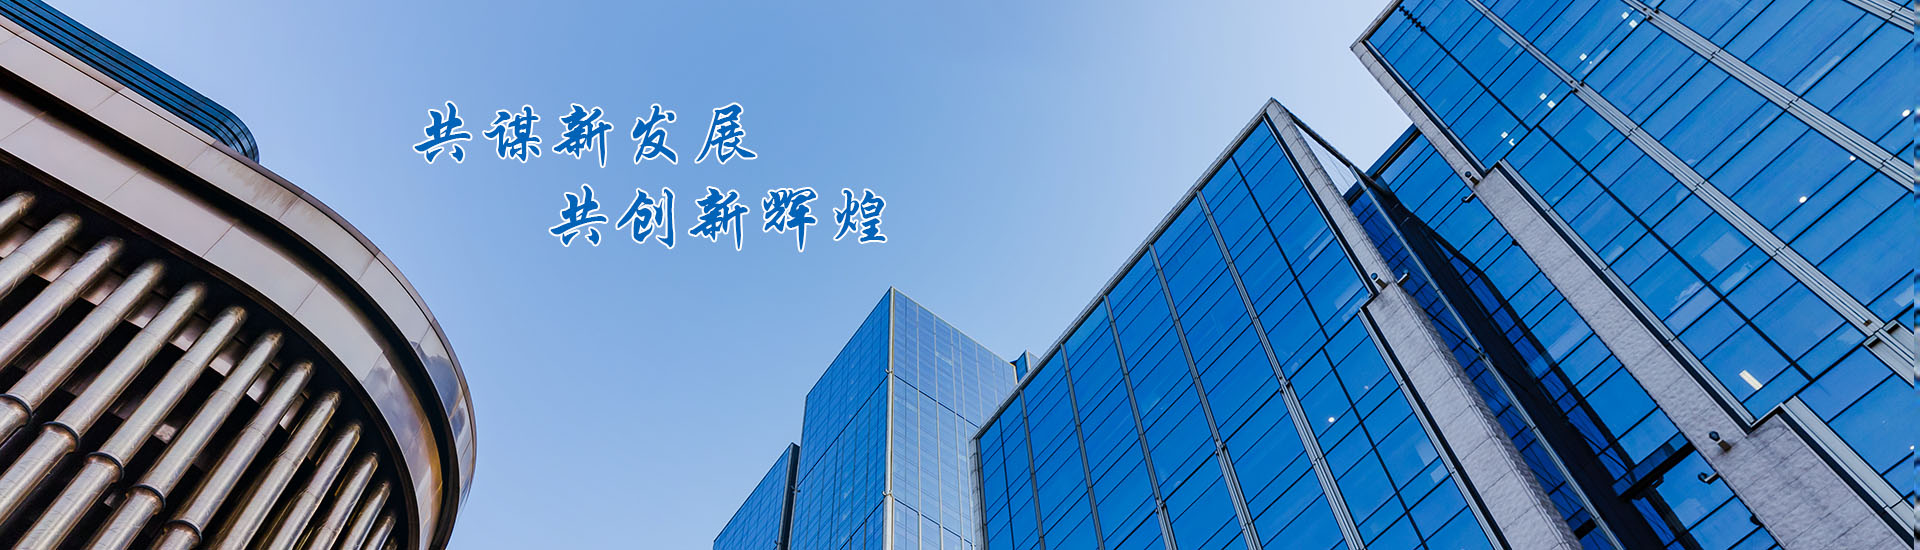 c7c7娱乐平台(中国游)最新官方网站入口